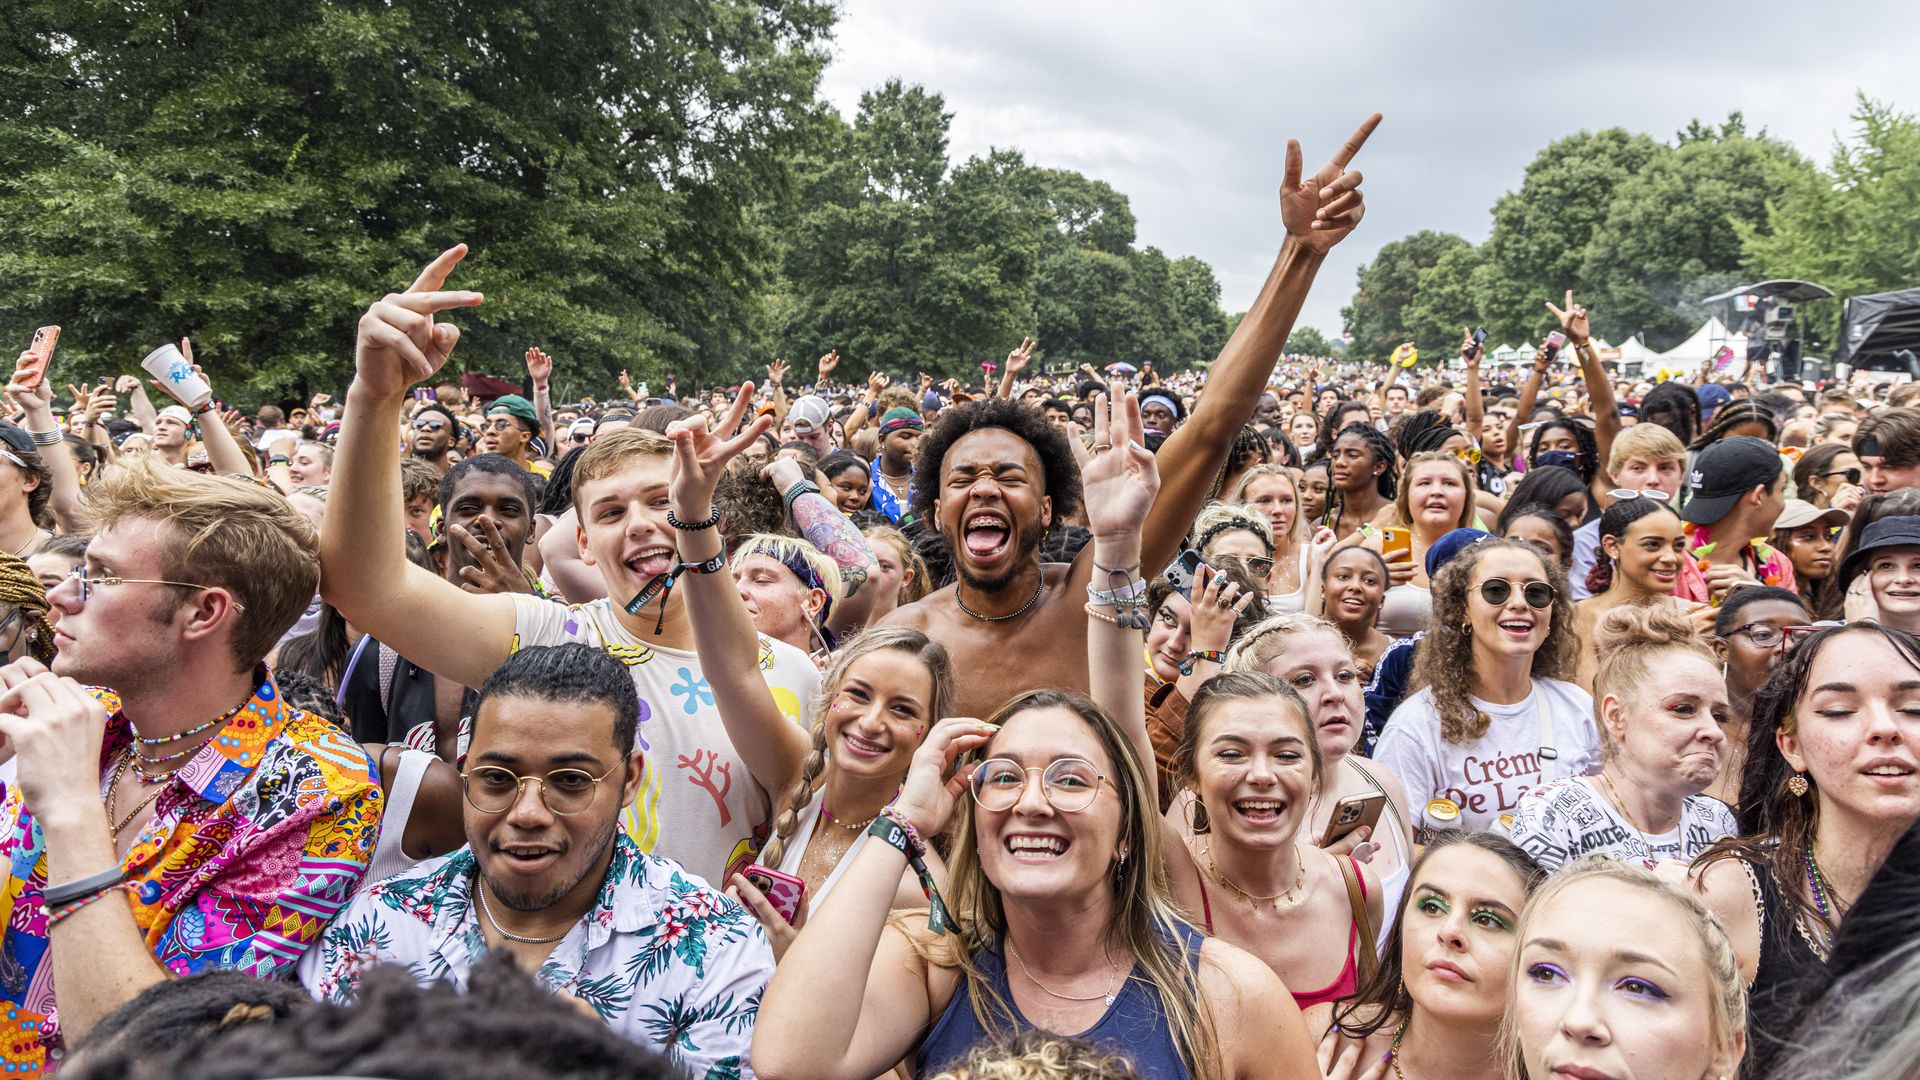 Atlanta's Music Midtown festival canceled Axios Atlanta